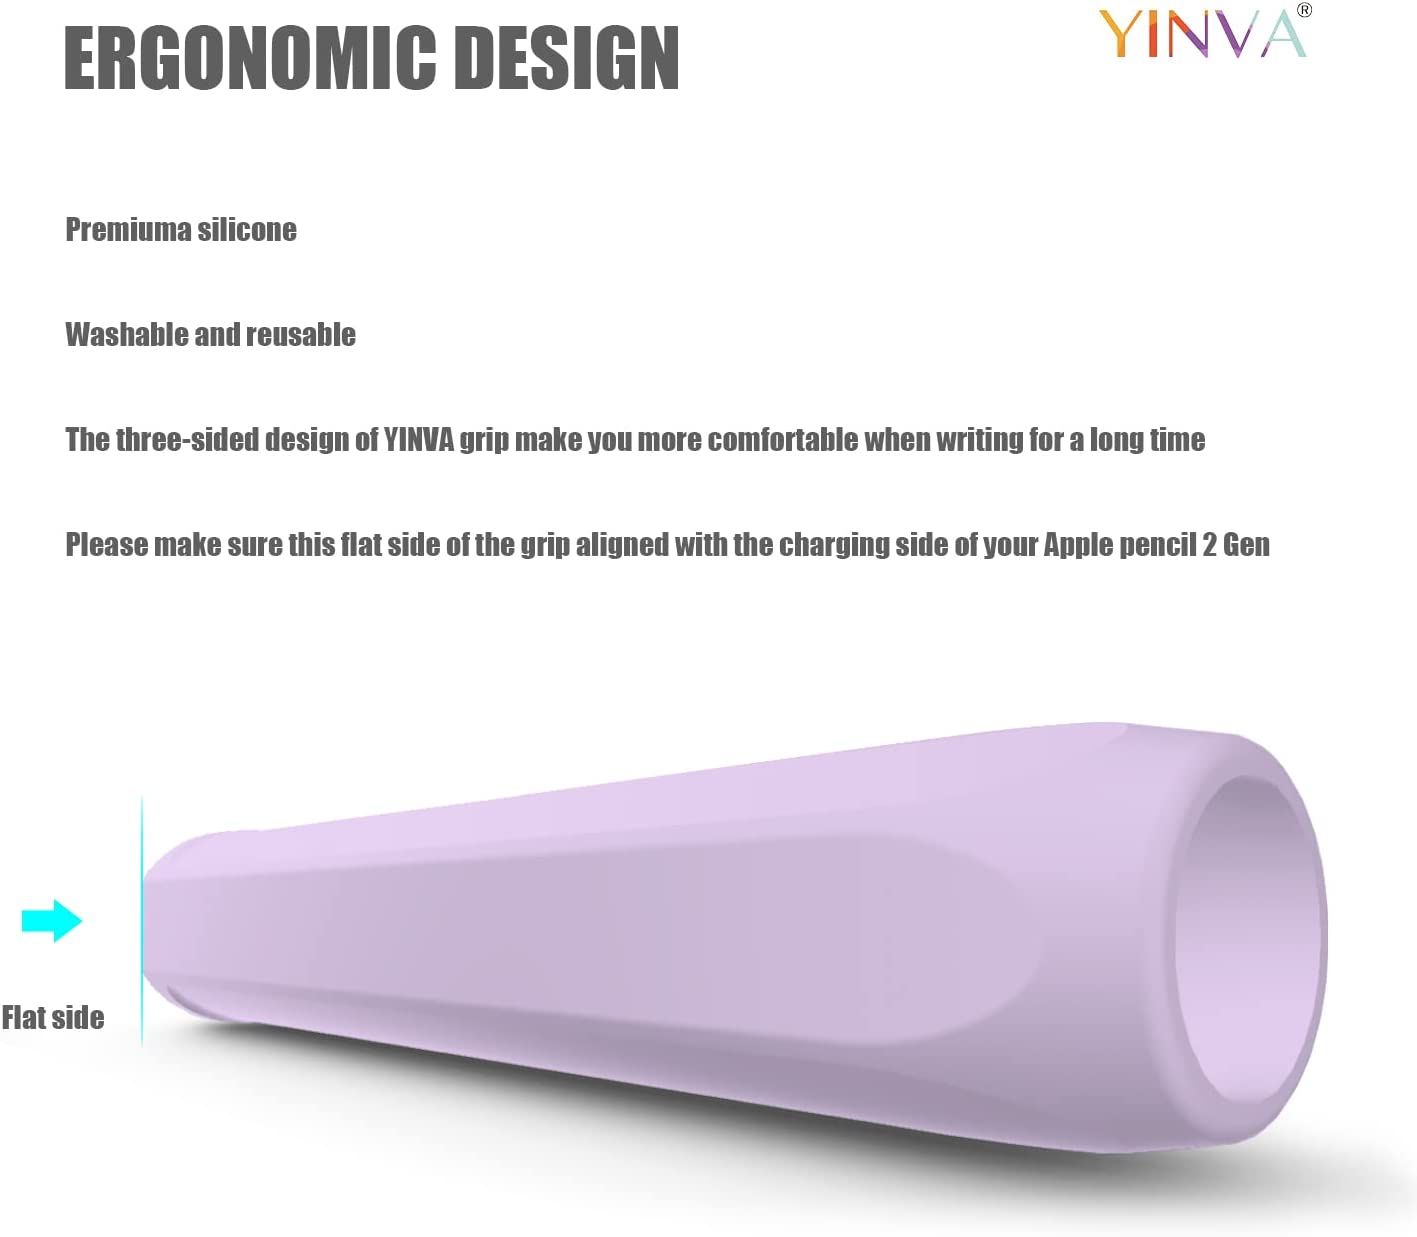 a close up of the yinva ergonomic grip and its ergonomic design